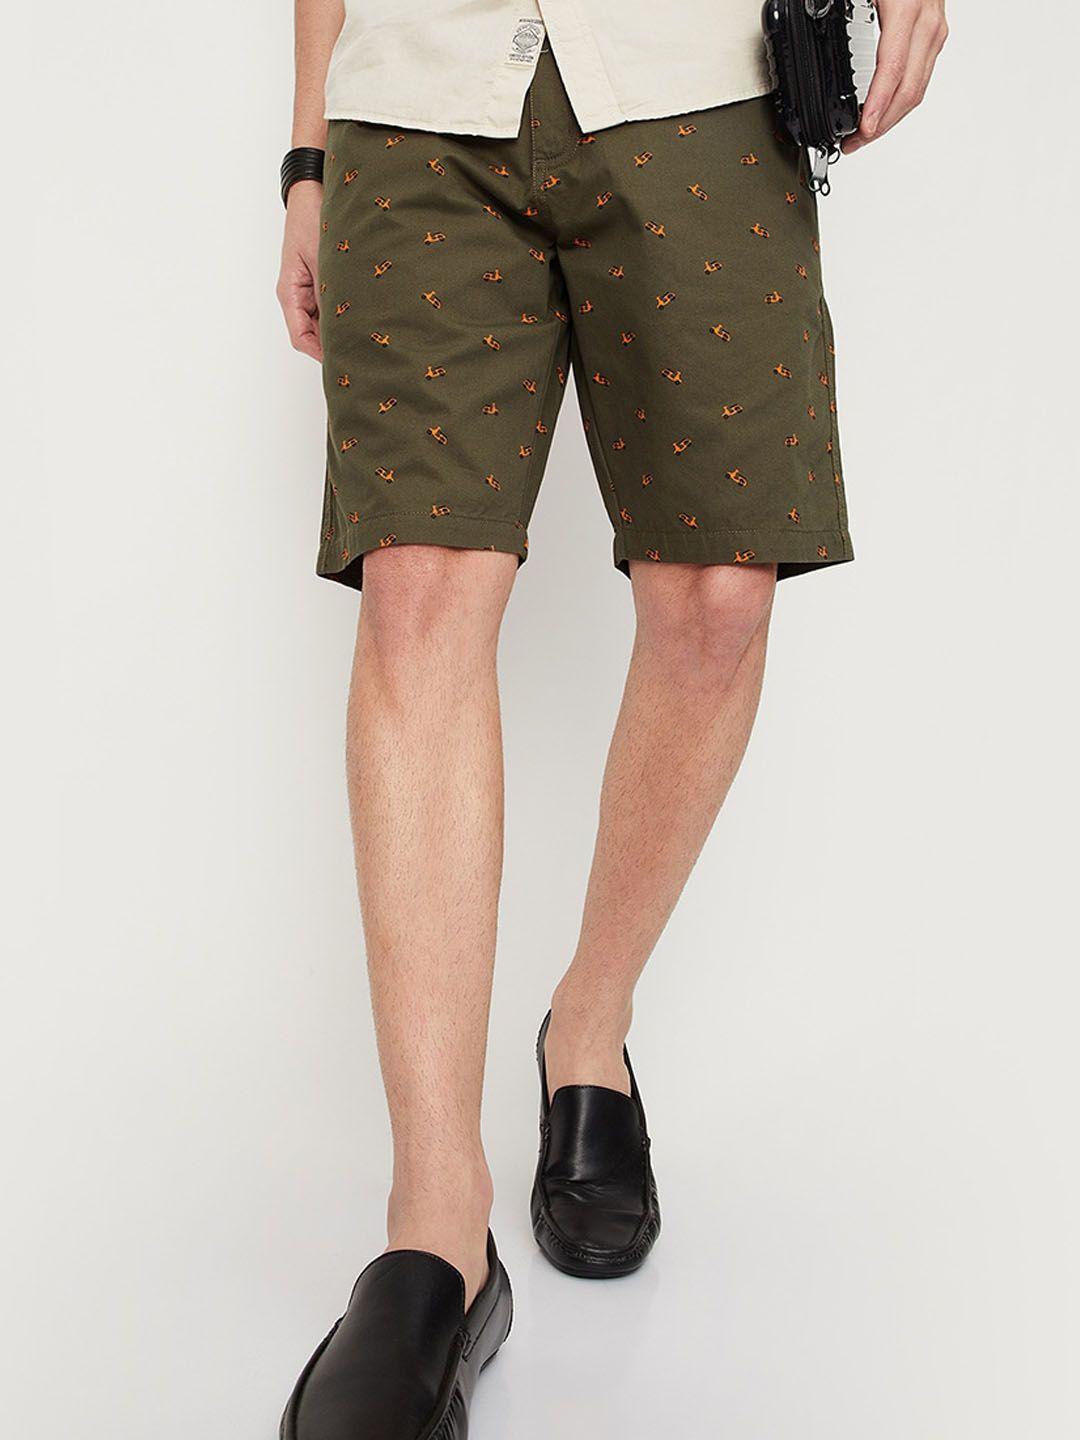 max-men-conversational-printed-cotton-shorts